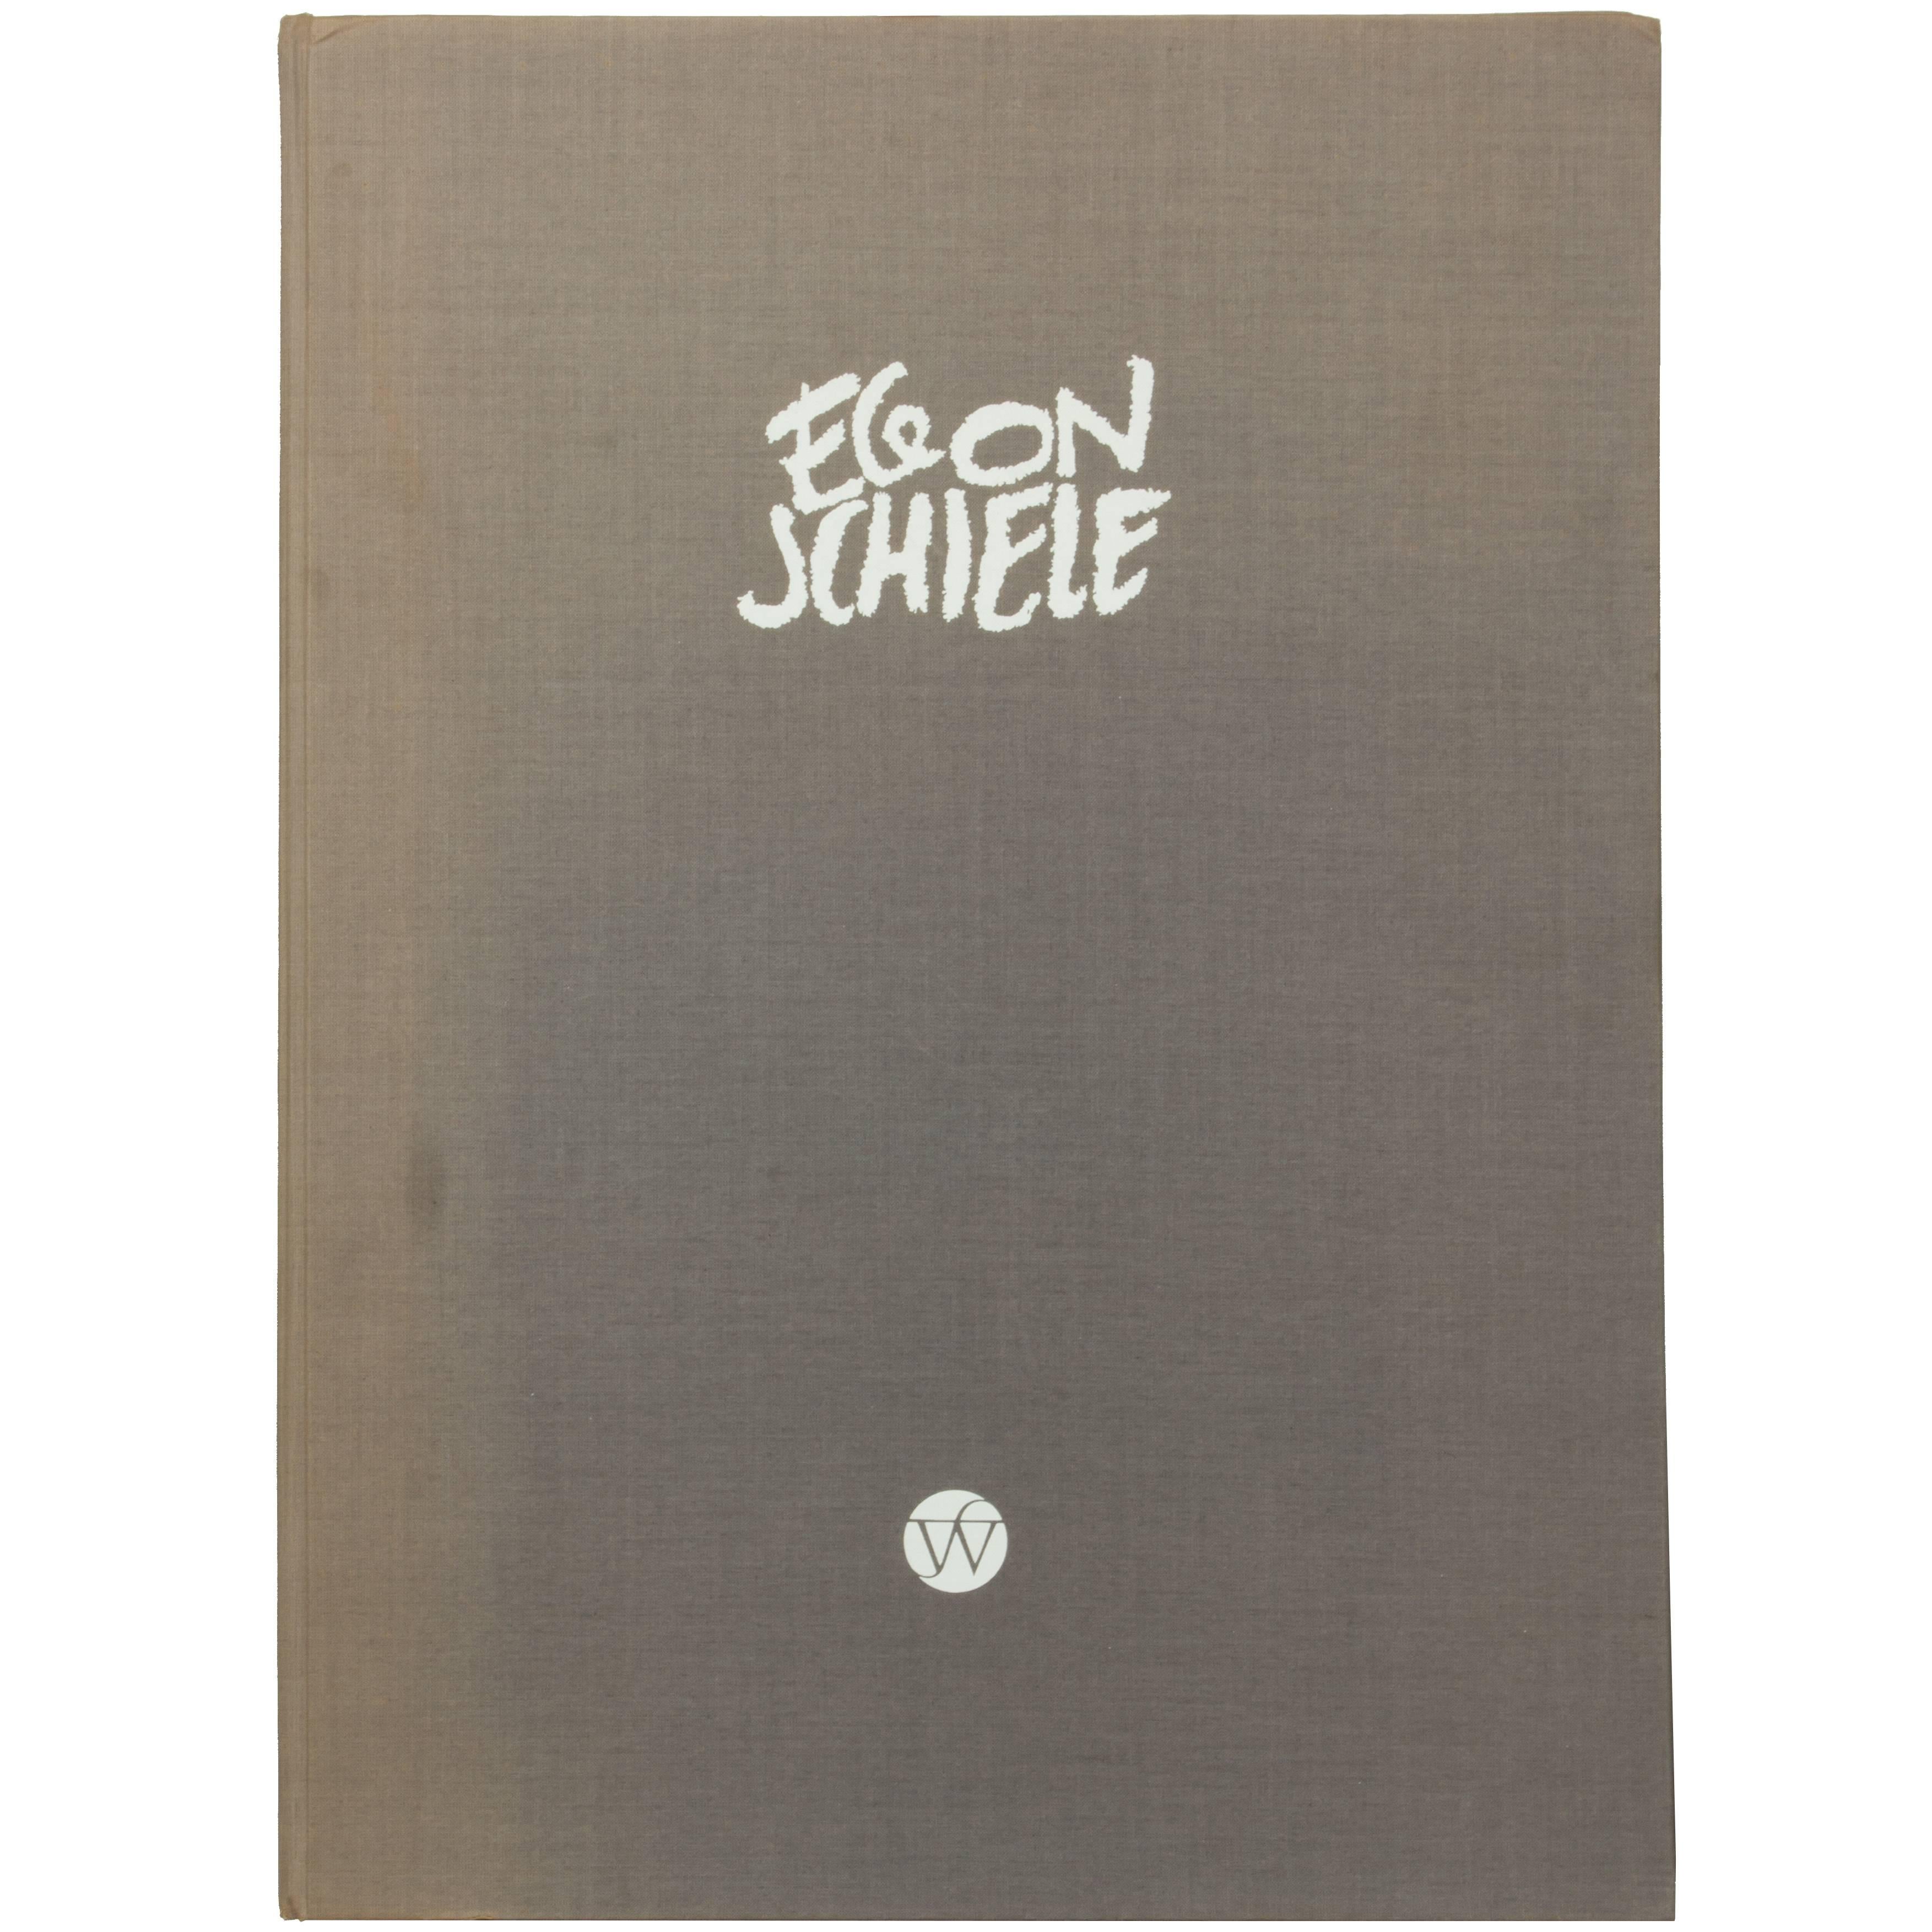 Egon Schiele "Aquarelle Und Zeichnungen, " "Watercolors and Drawings" Art Book For Sale